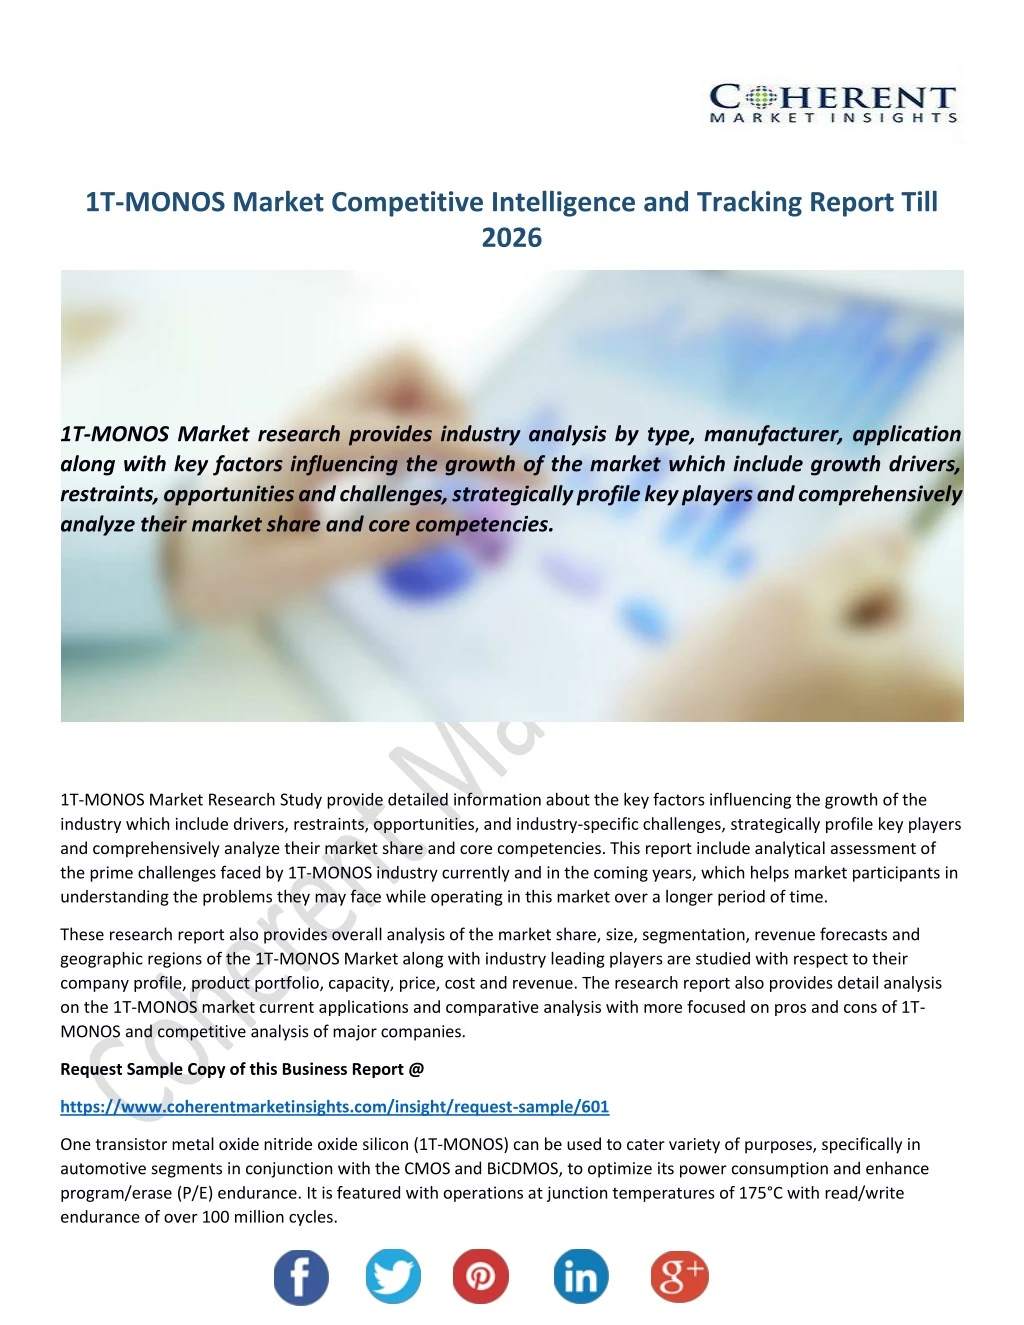 1t monos market competitive intelligence